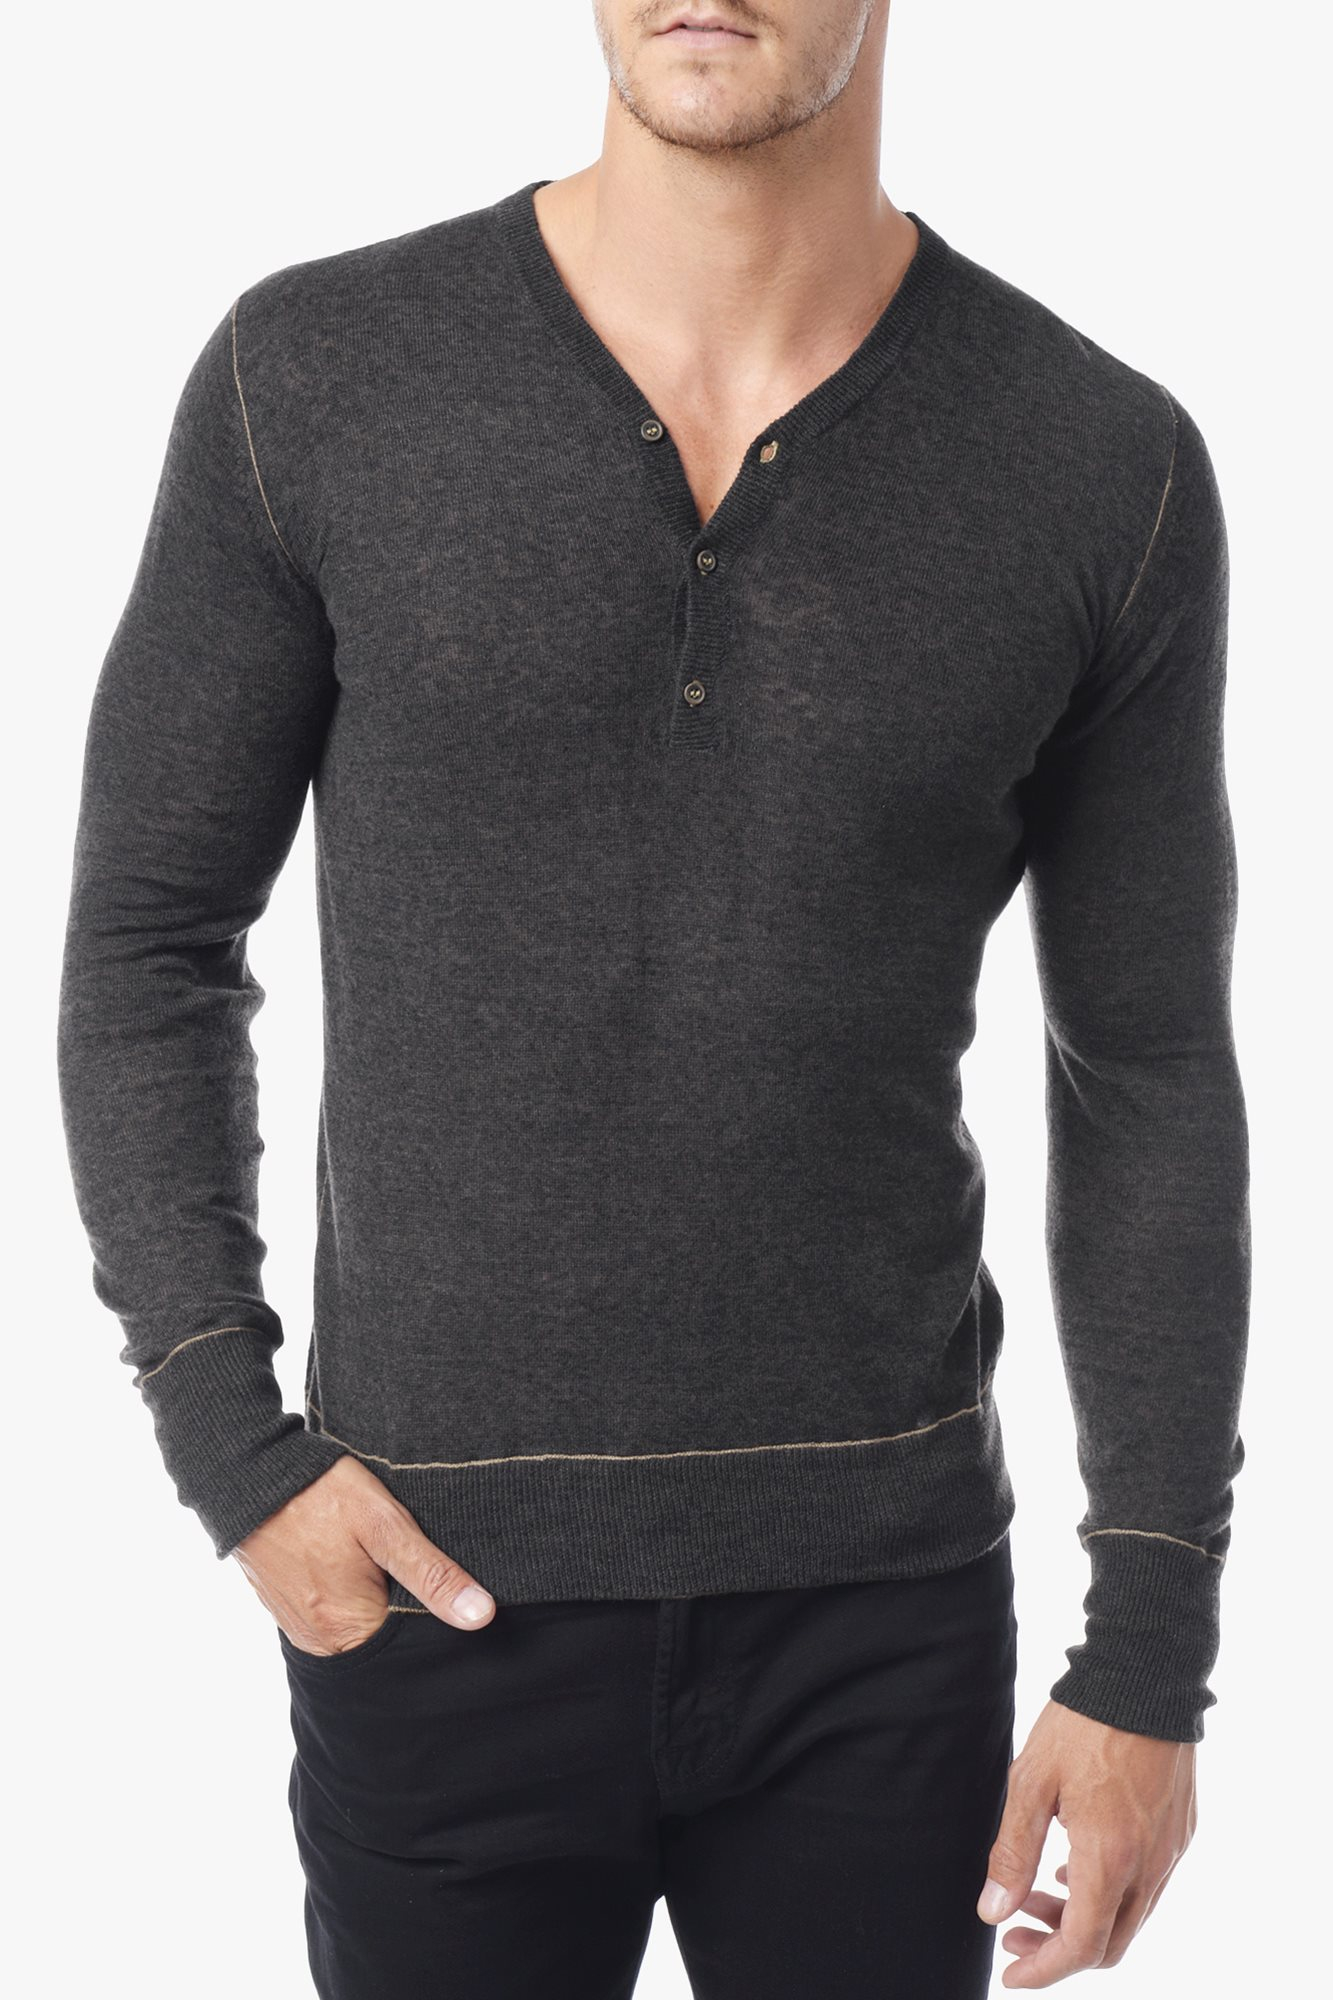 Lyst - 7 For All Mankind V-Neck Henley Sweater in Black for Men